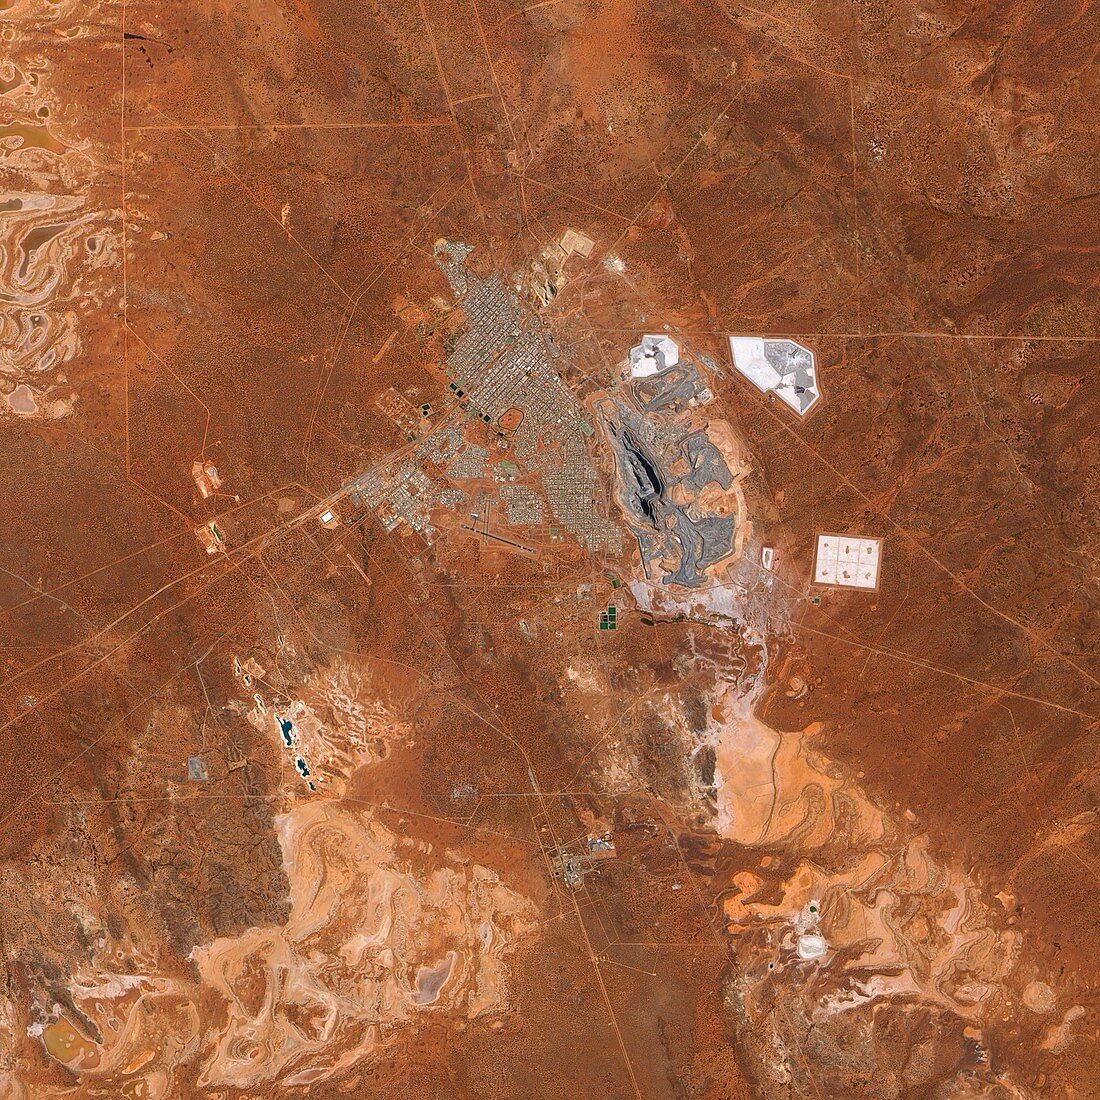 Kalgoorlie and Super Pit mine,Australia